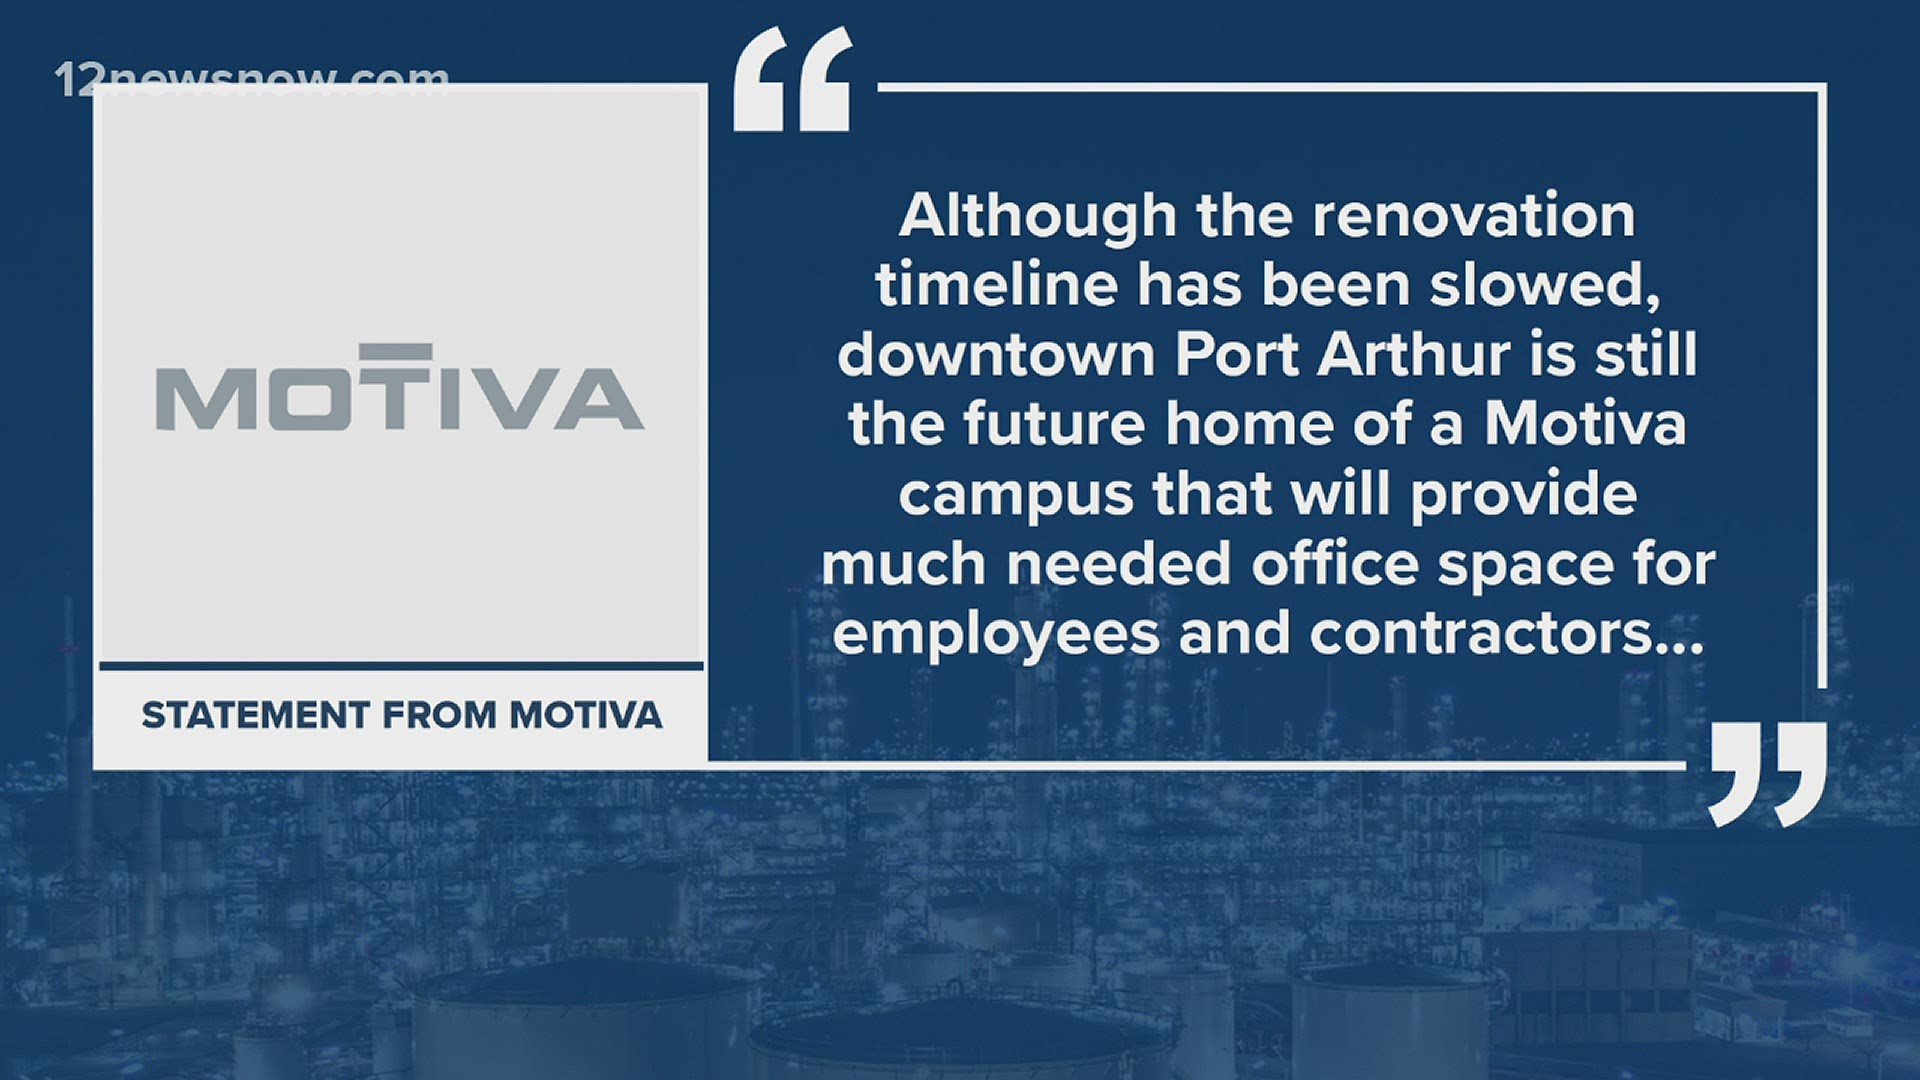 Motiva says its downtown Port Arthur development project is still happening.